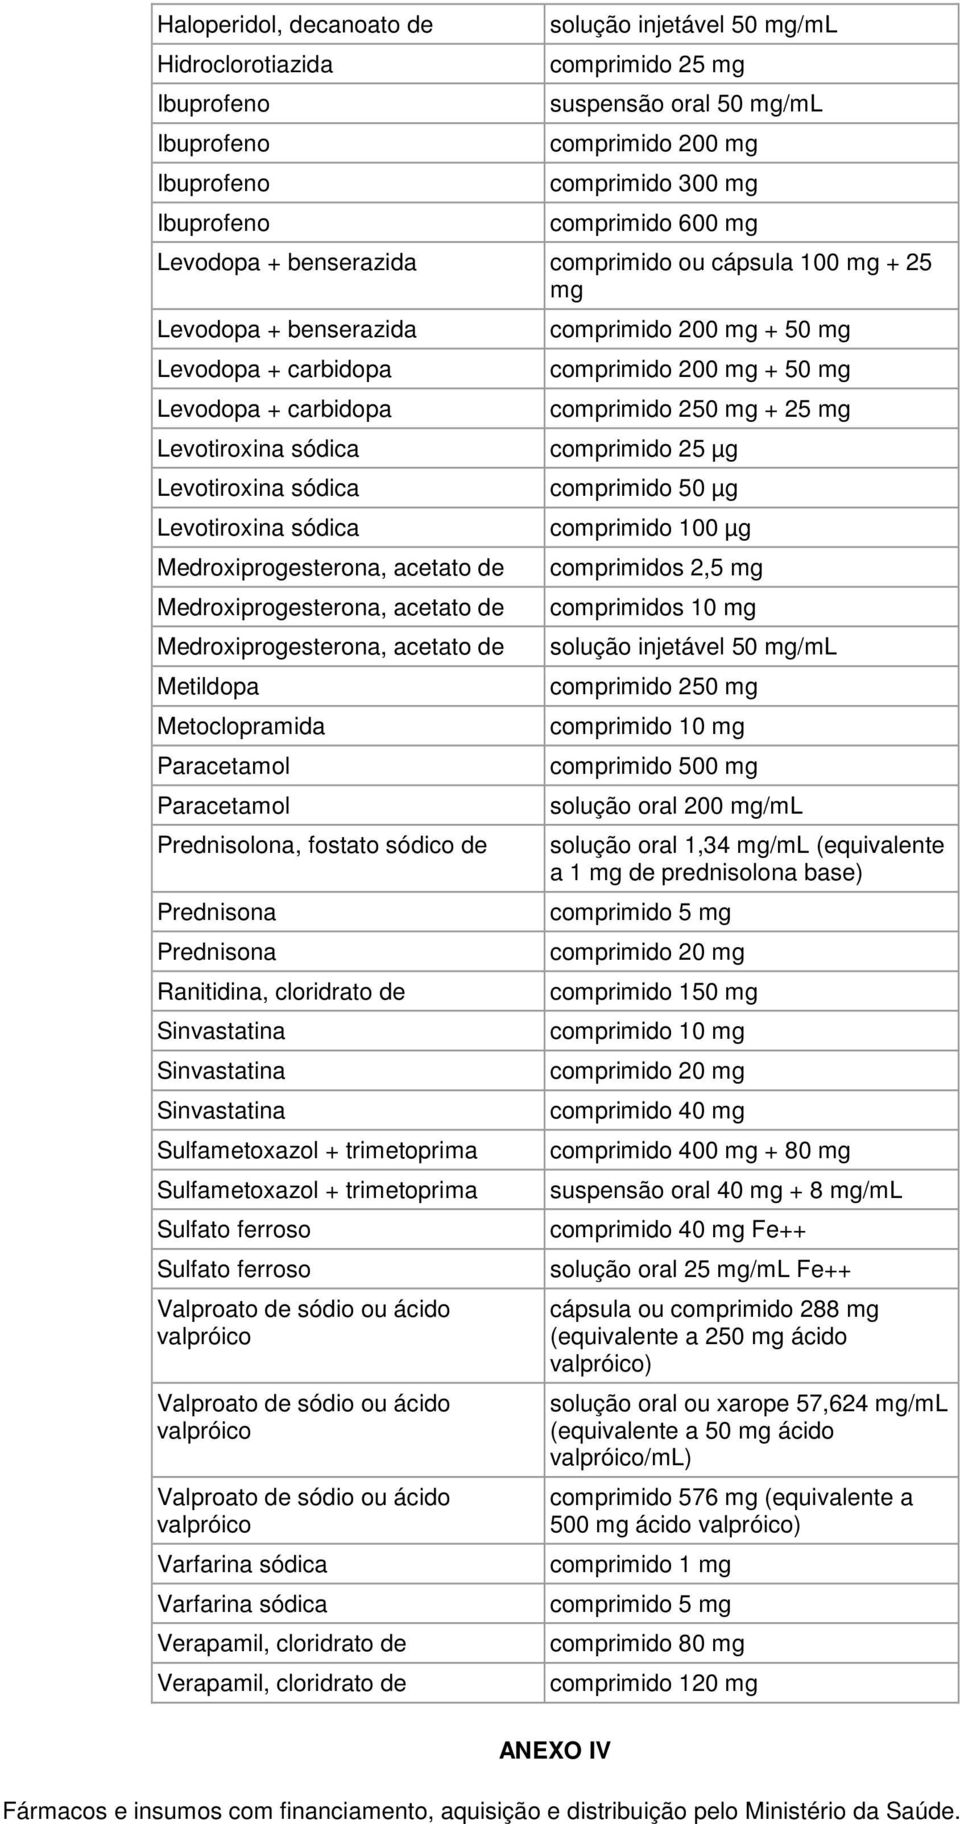 Levotiroxina sódica comprimido 50 µg Levotiroxina sódica comprimido 100 µg Medroxiprogesterona, acetato de Medroxiprogesterona, acetato de Medroxiprogesterona, acetato de Metildopa Metoclopramida